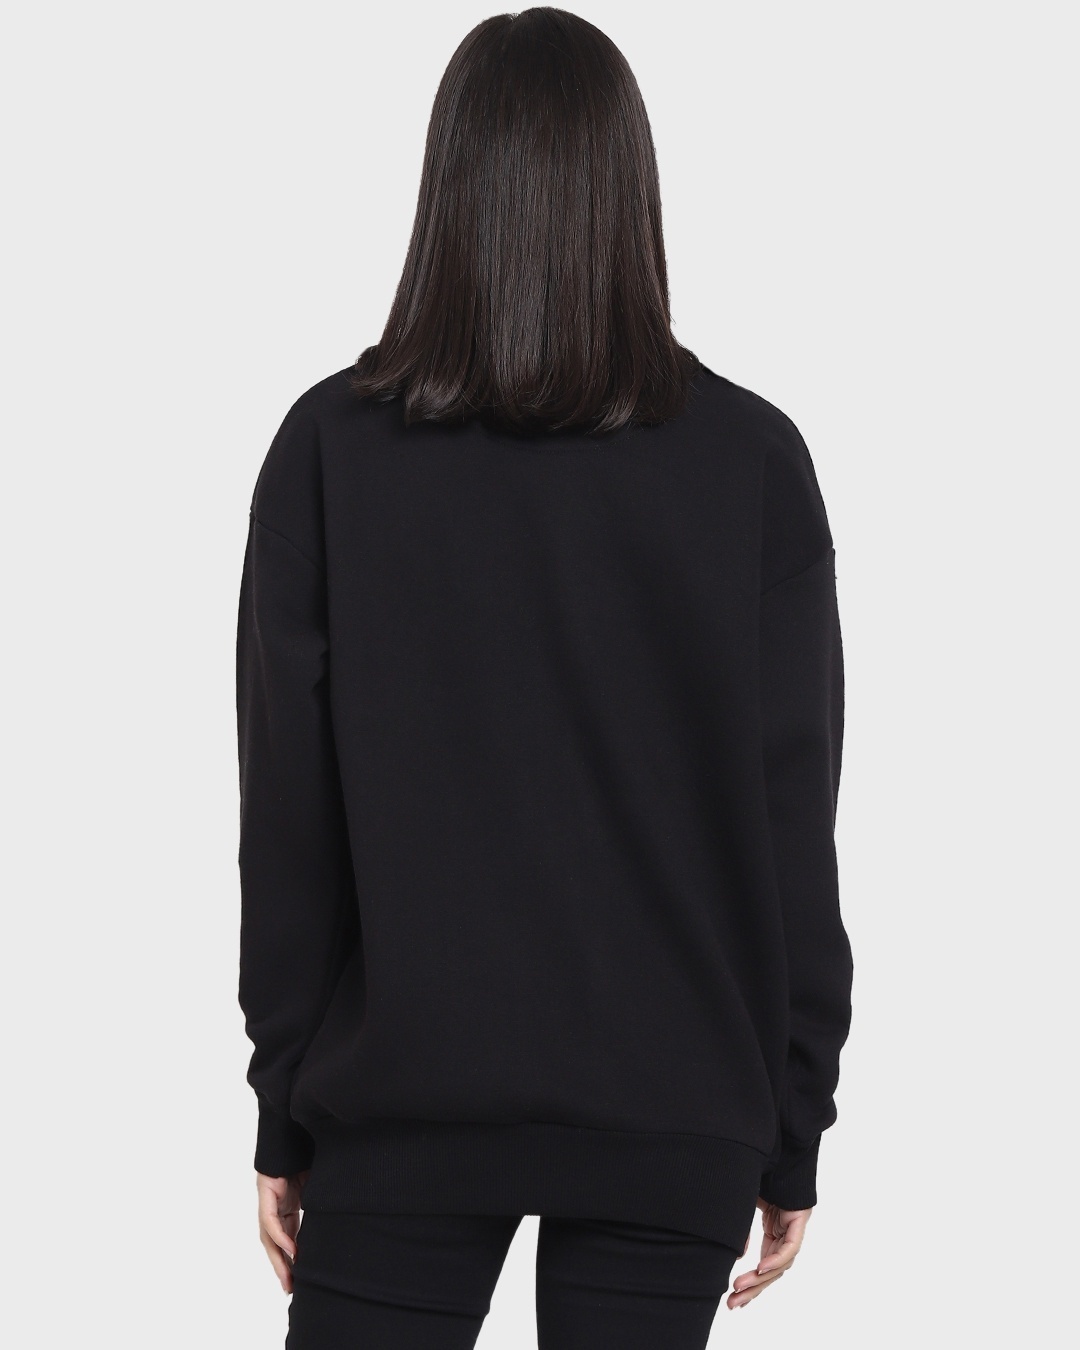 Shop Women's Oversized Winter Black Sweatshirt-Design